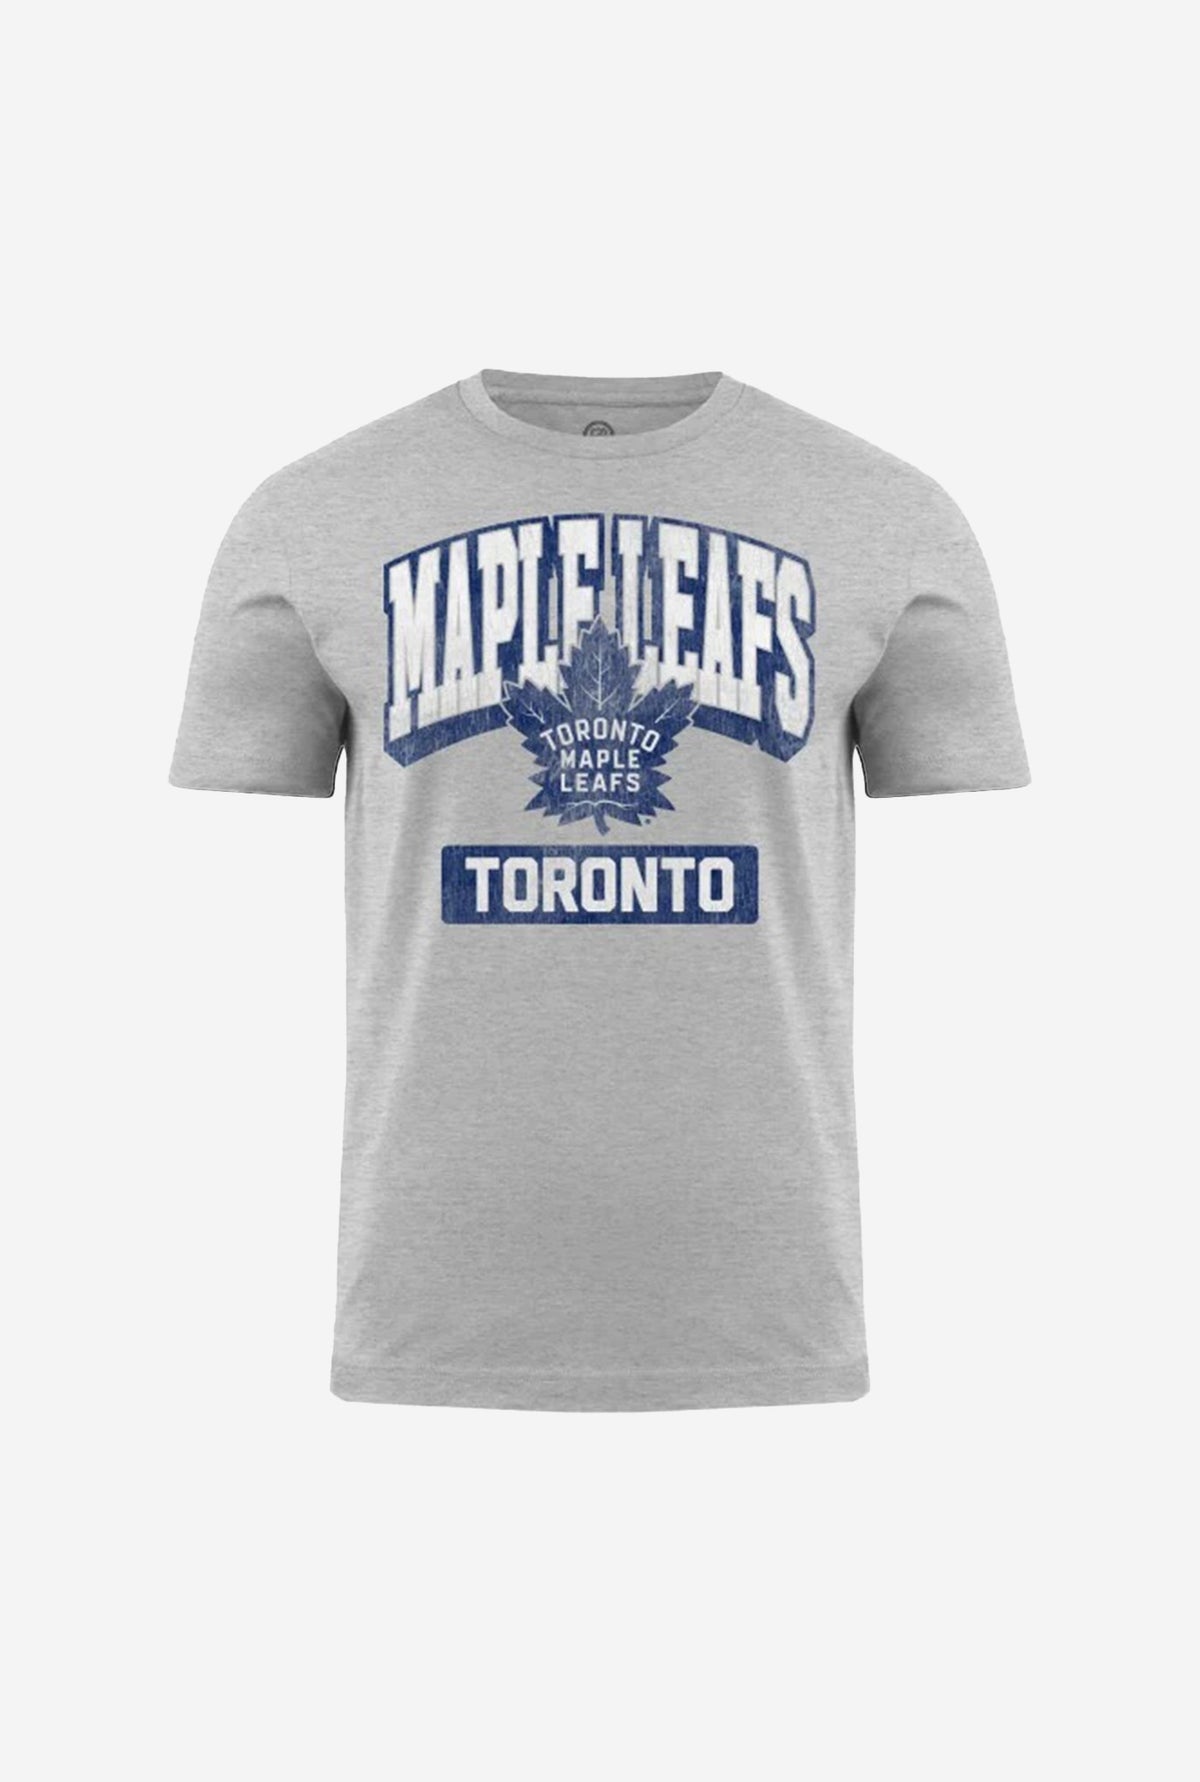 Toronto Maple Leafs Hudson T-Shirt - Grey